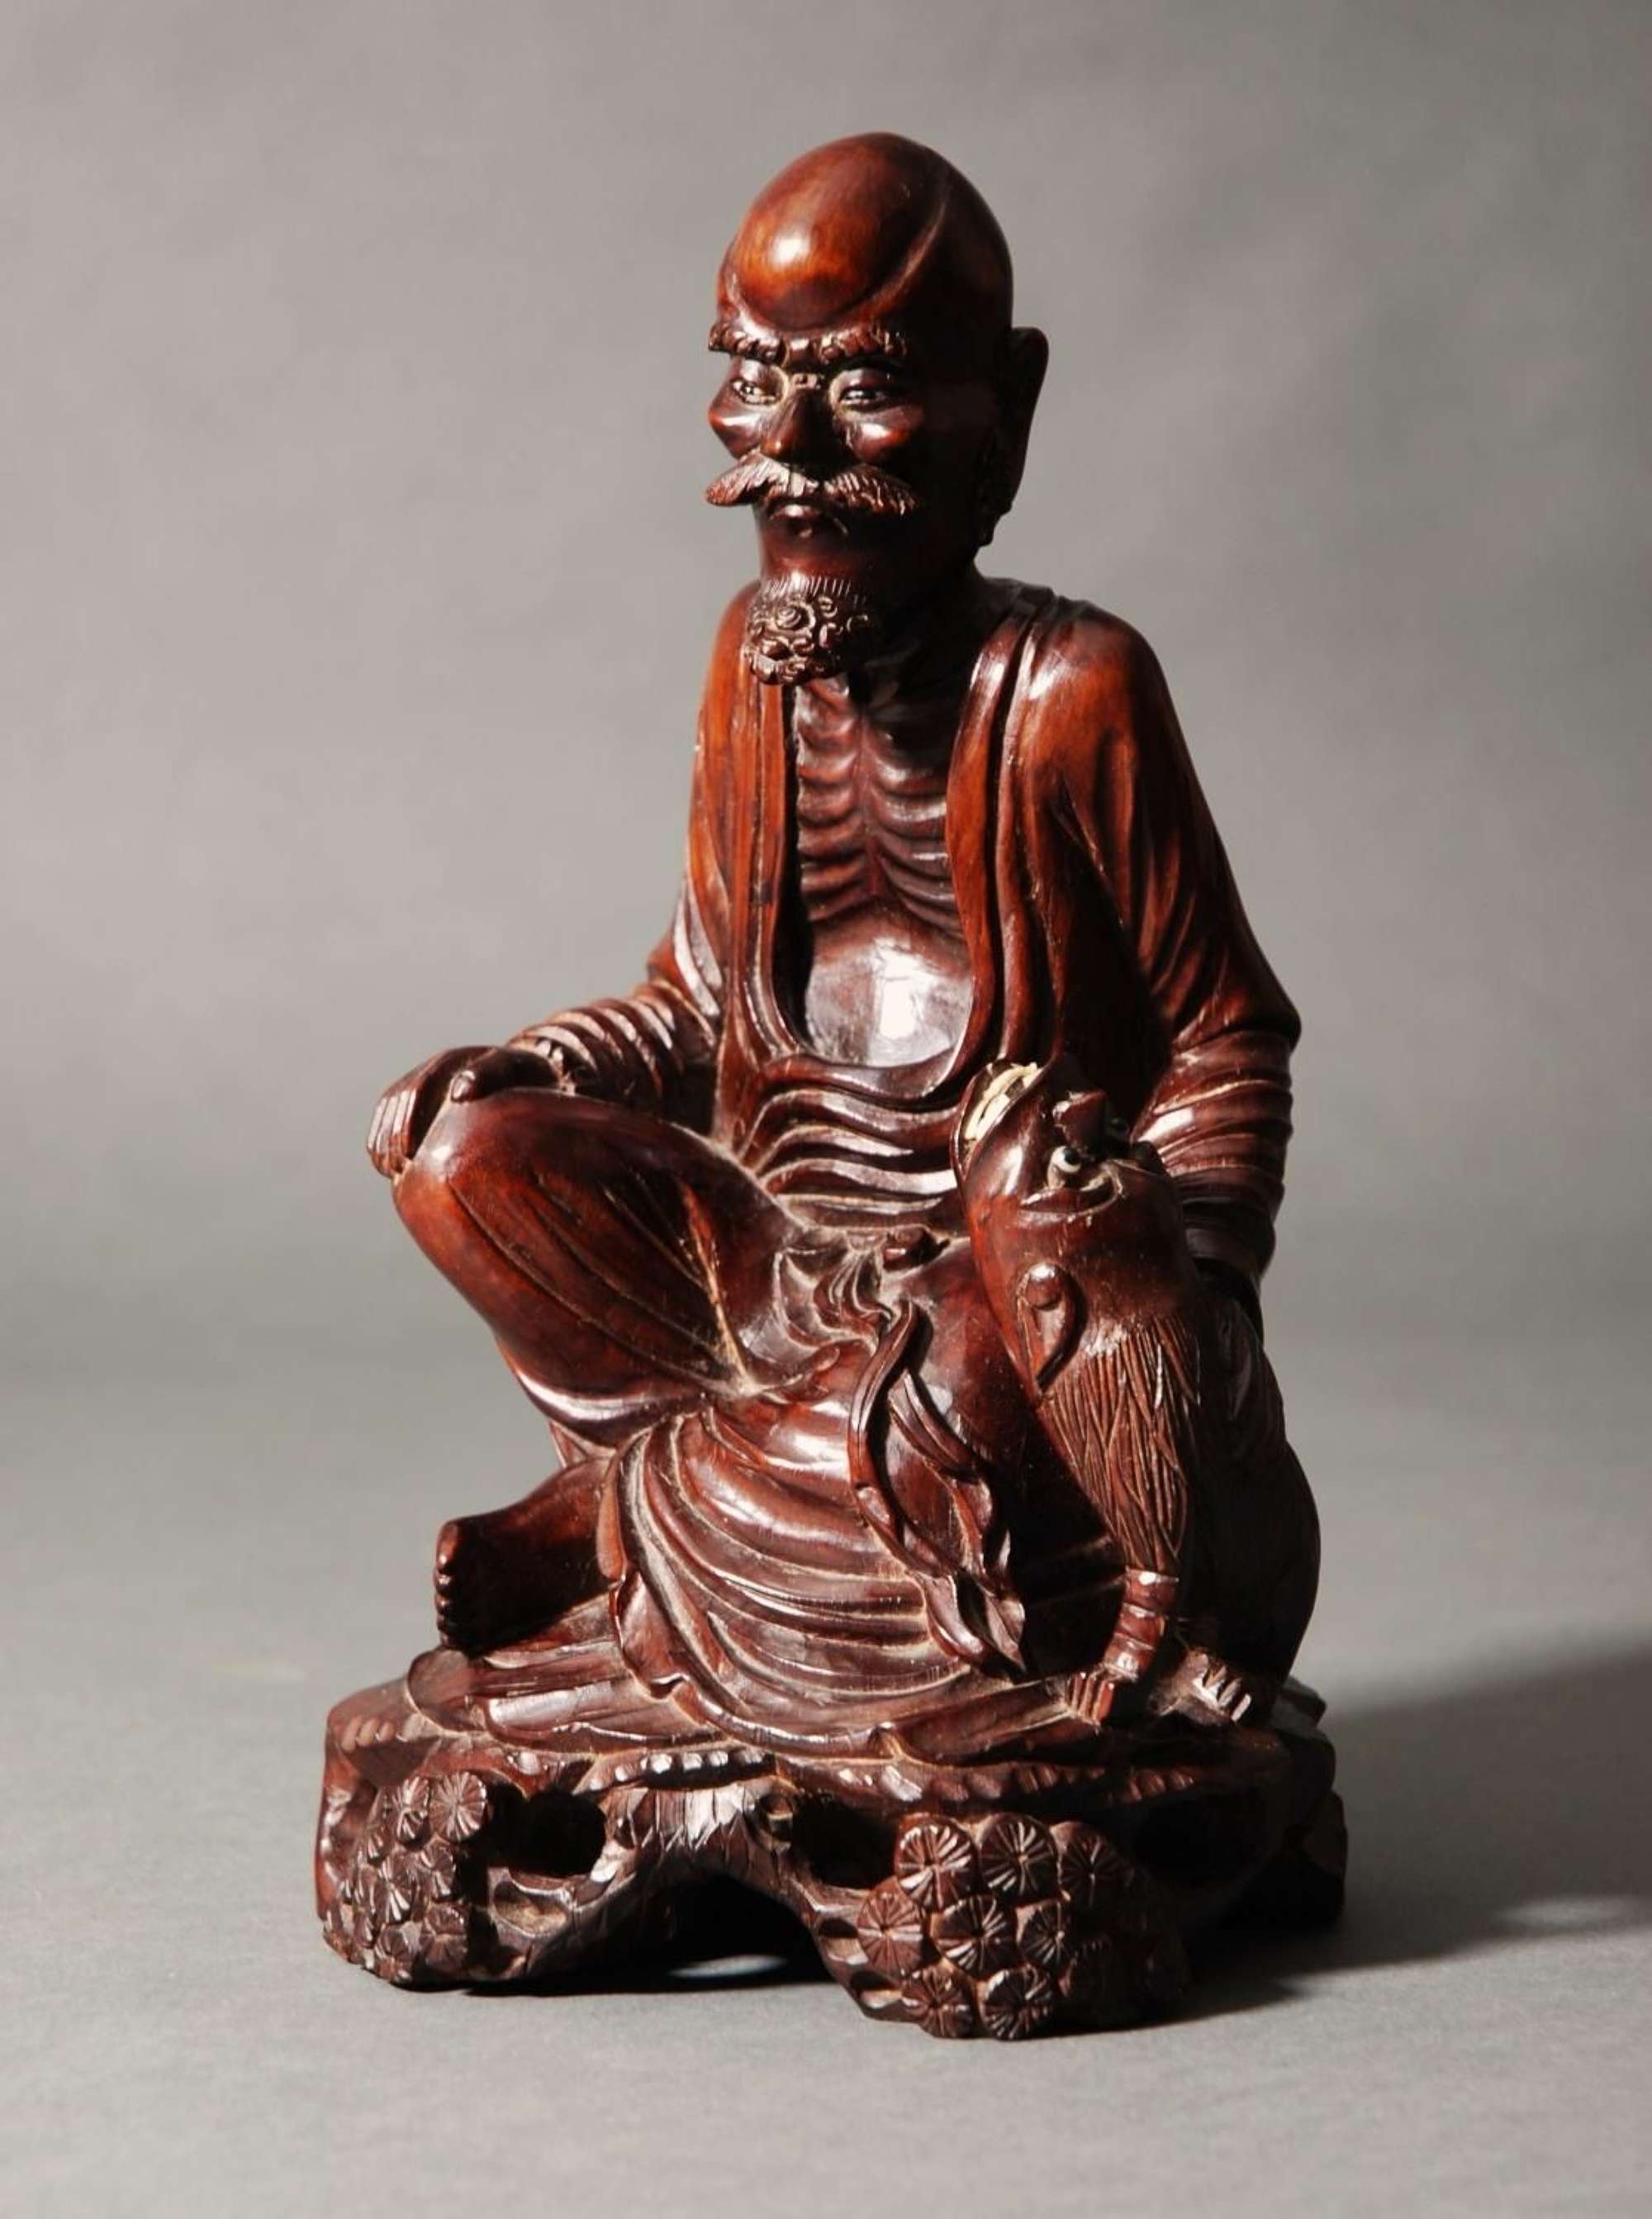 Chinese hardwood carving of emaciated man